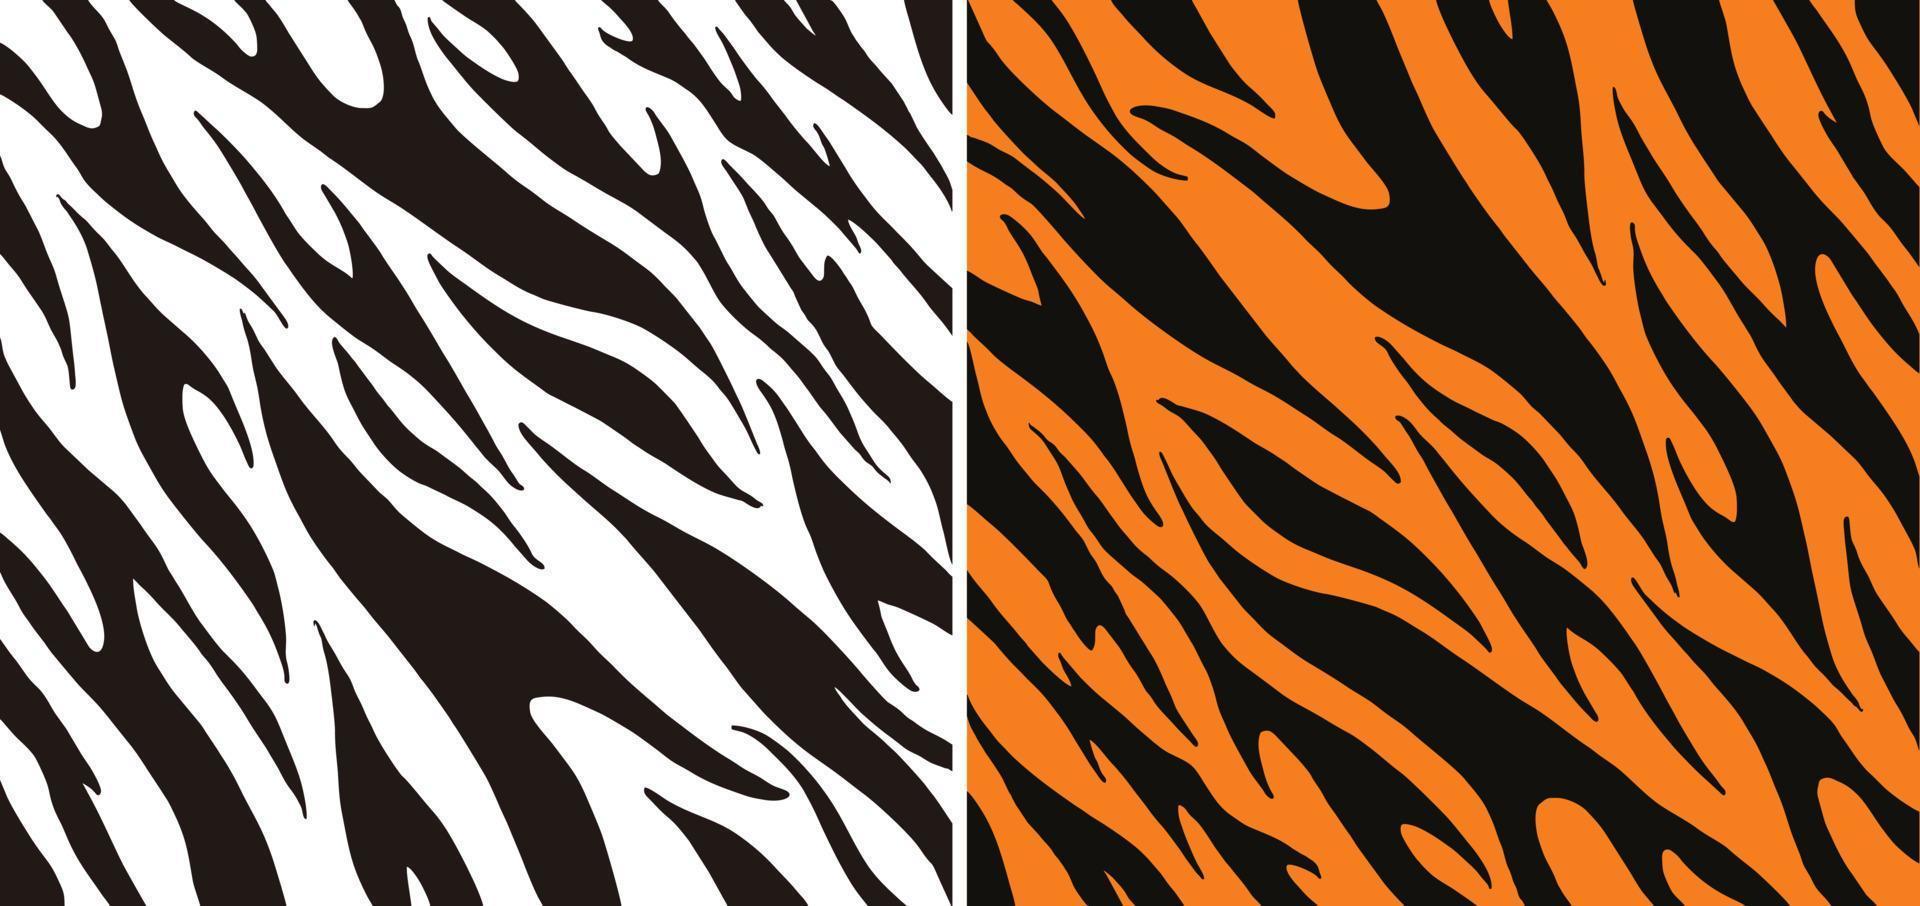 Pattern tiger and zebra vector image illustrations